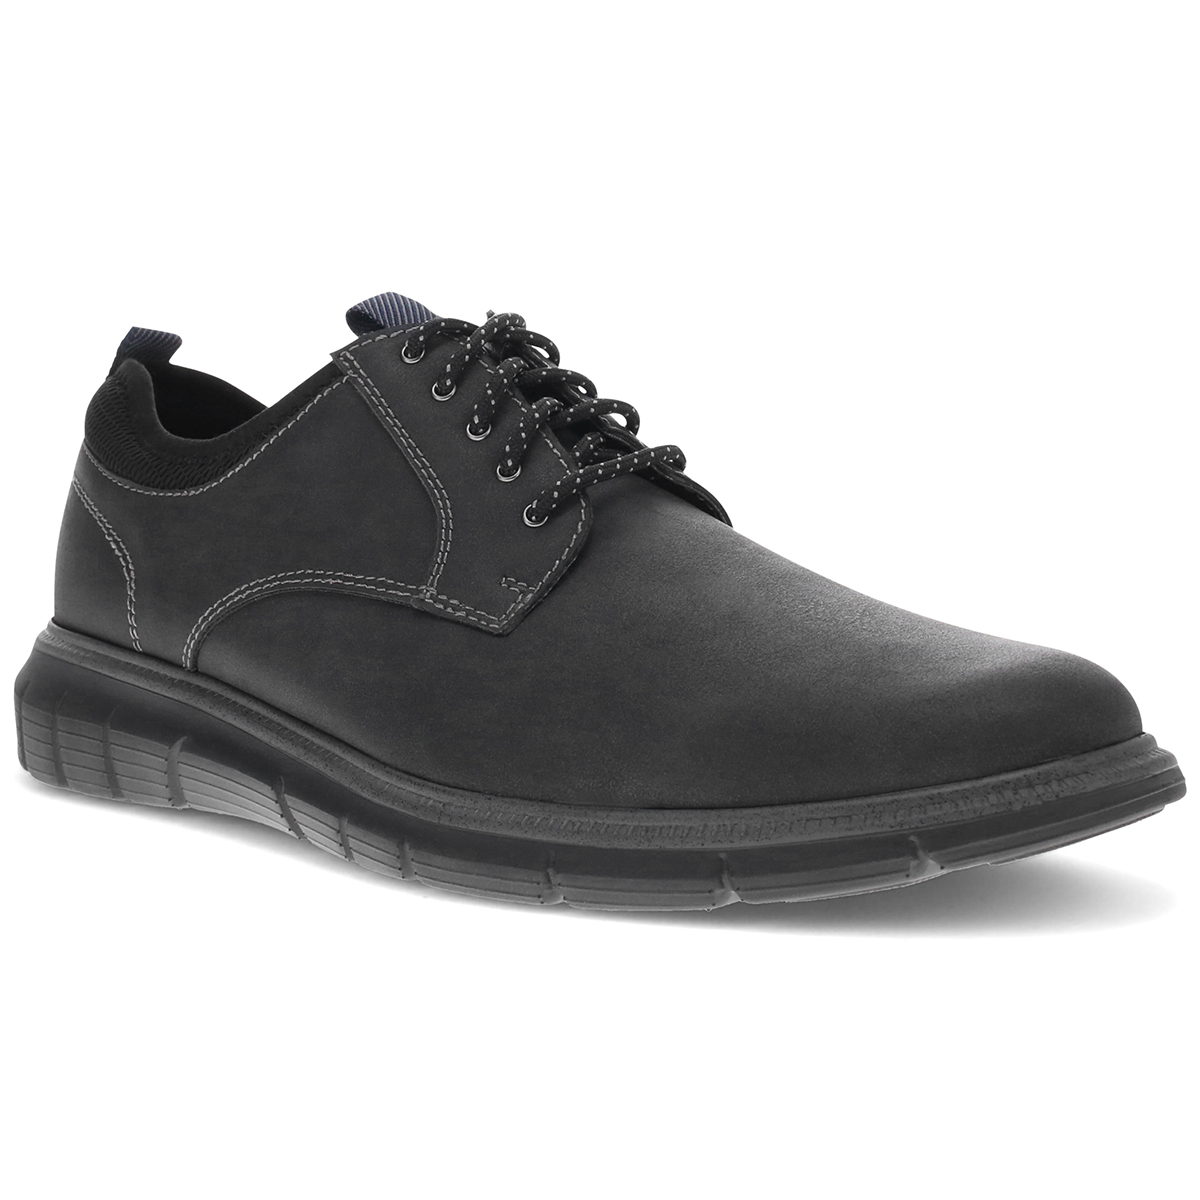 Dockers Men's Cooper Supremeflex Oxford Shoes - Size 13